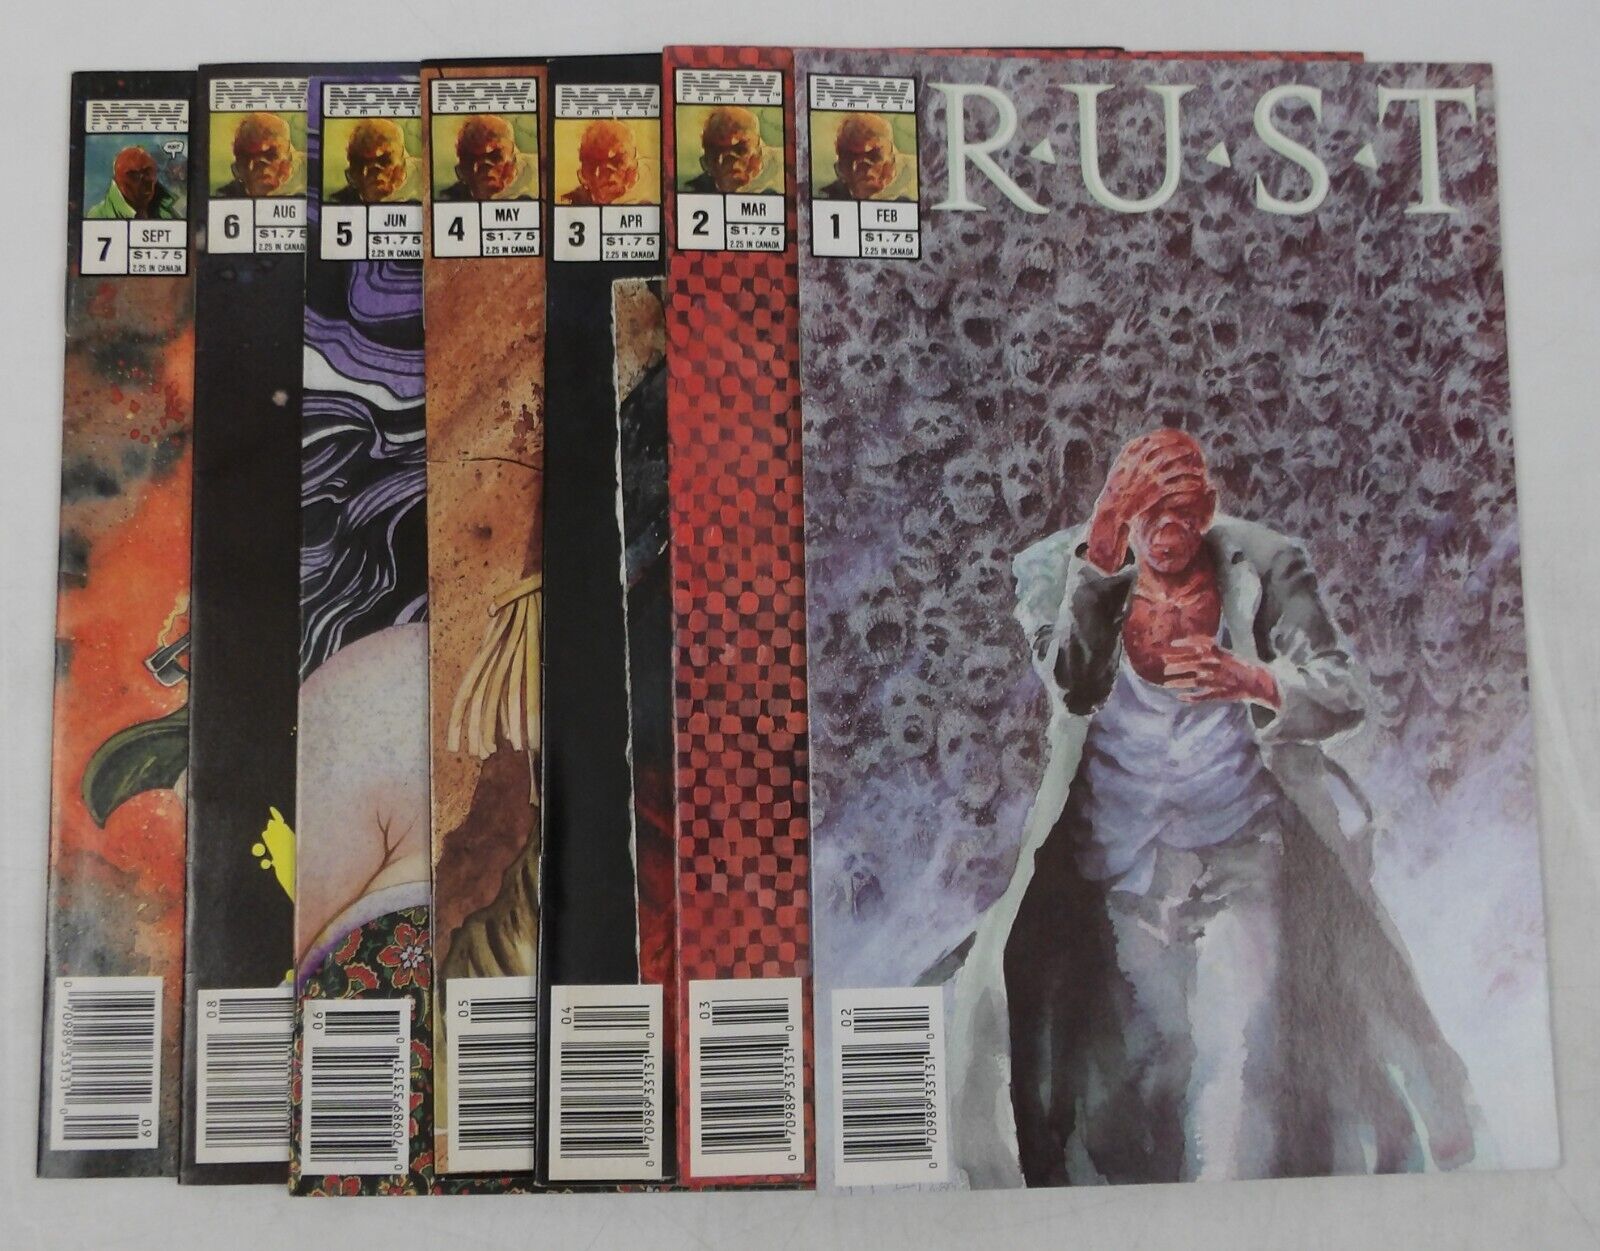 Rust Vol. 2 #1-7 FN/VF complete series - NOW Comics 2 3 4 5 6 all newsstand set